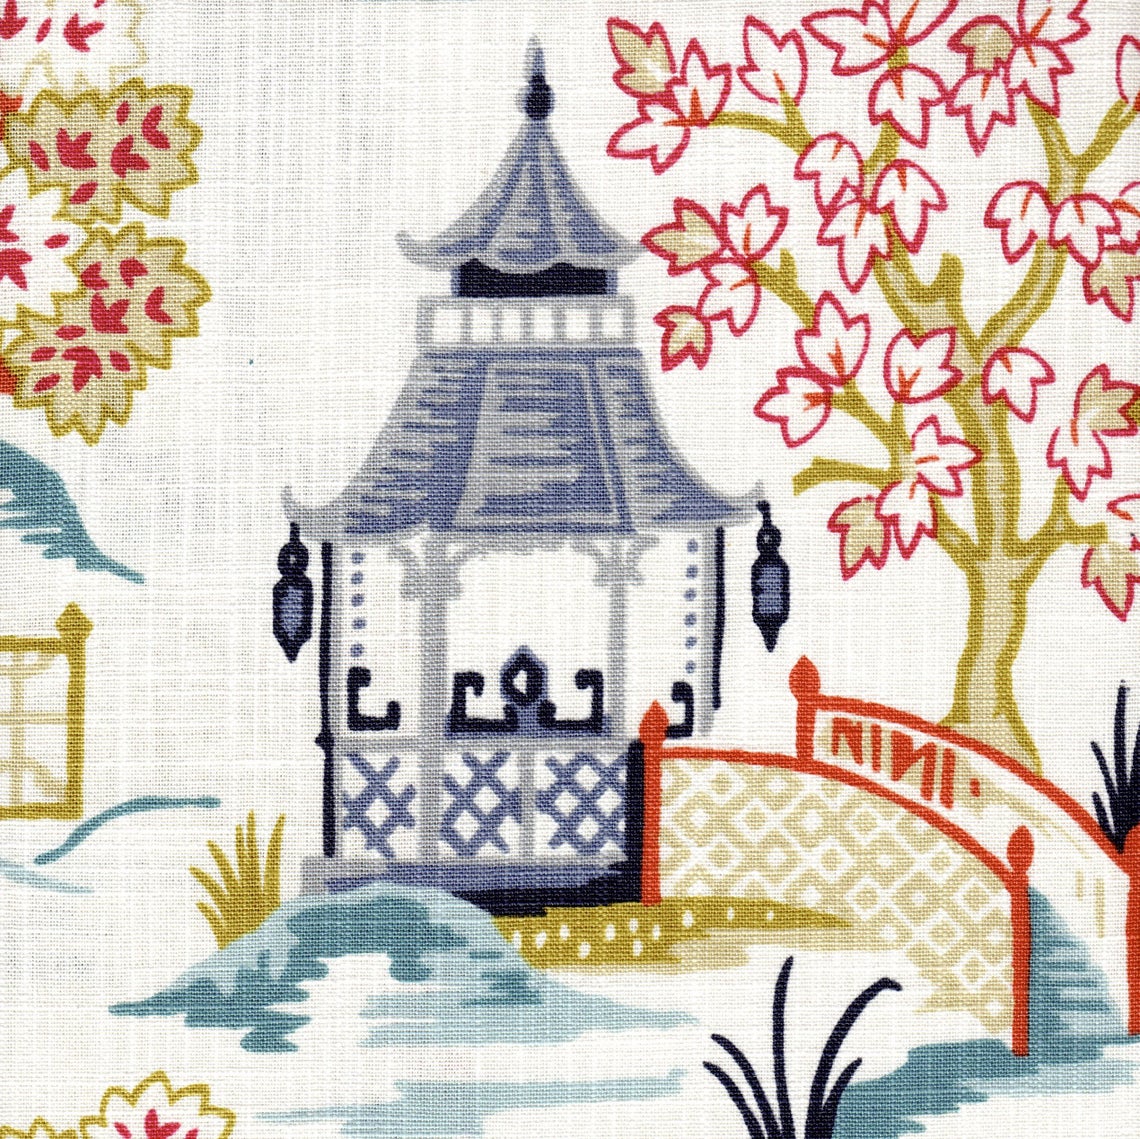 rod pocket curtain panels pair in shoji summer oriental toile, multicolor chinoiserie